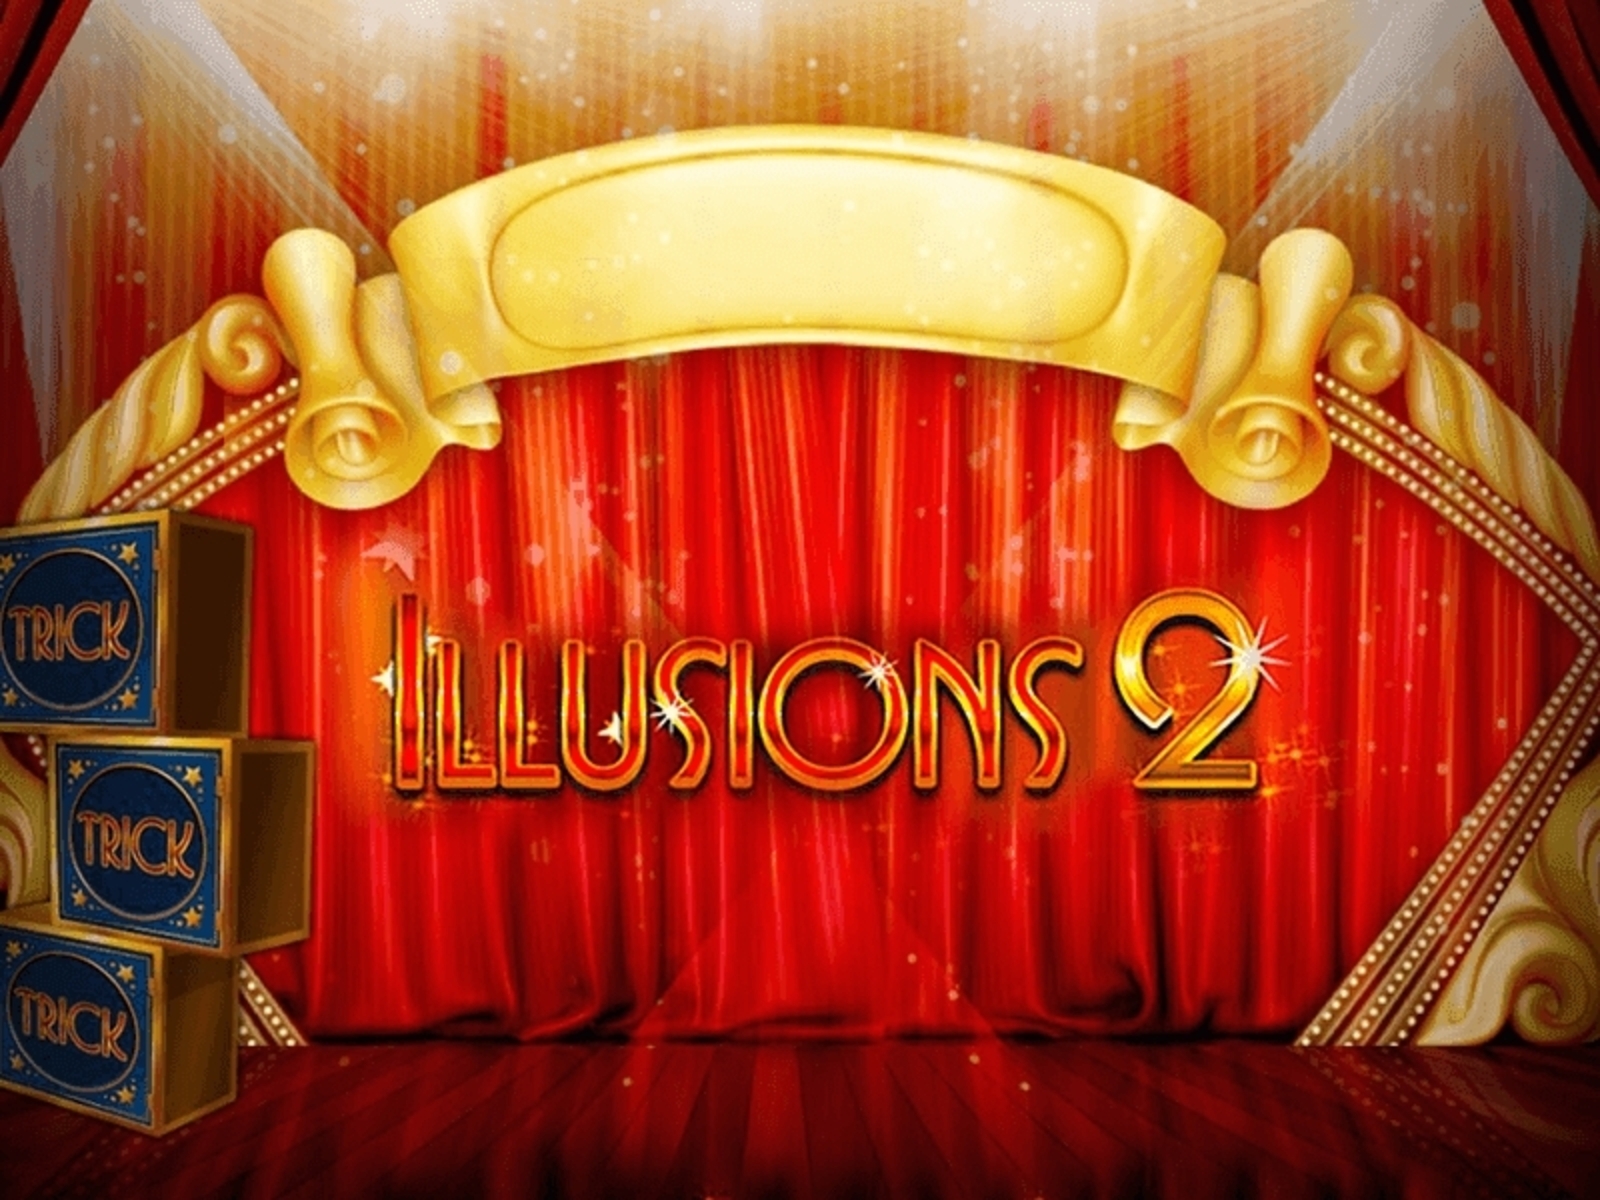 Illusions 2 demo